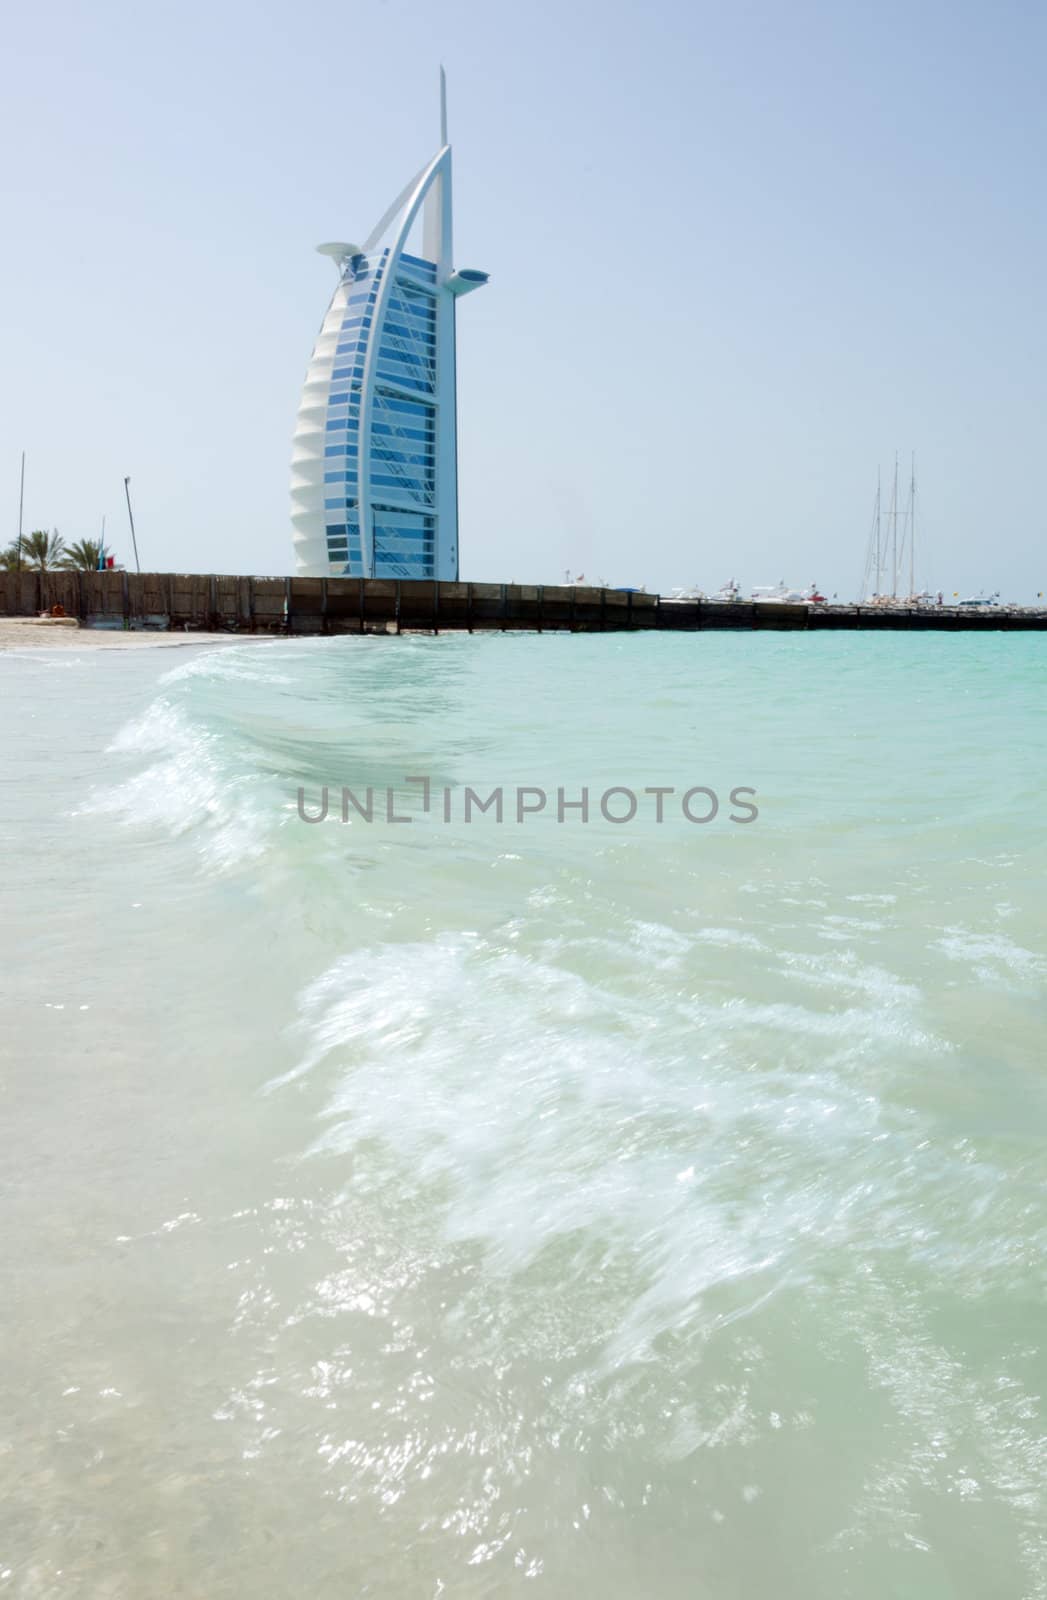 DUBAI - FEB 27  Burj Al Arab - at 321m luxury hotel stands on artificial island, Feb 21, 2012 Jumeirah beach, Dubai, United Arab Emirates